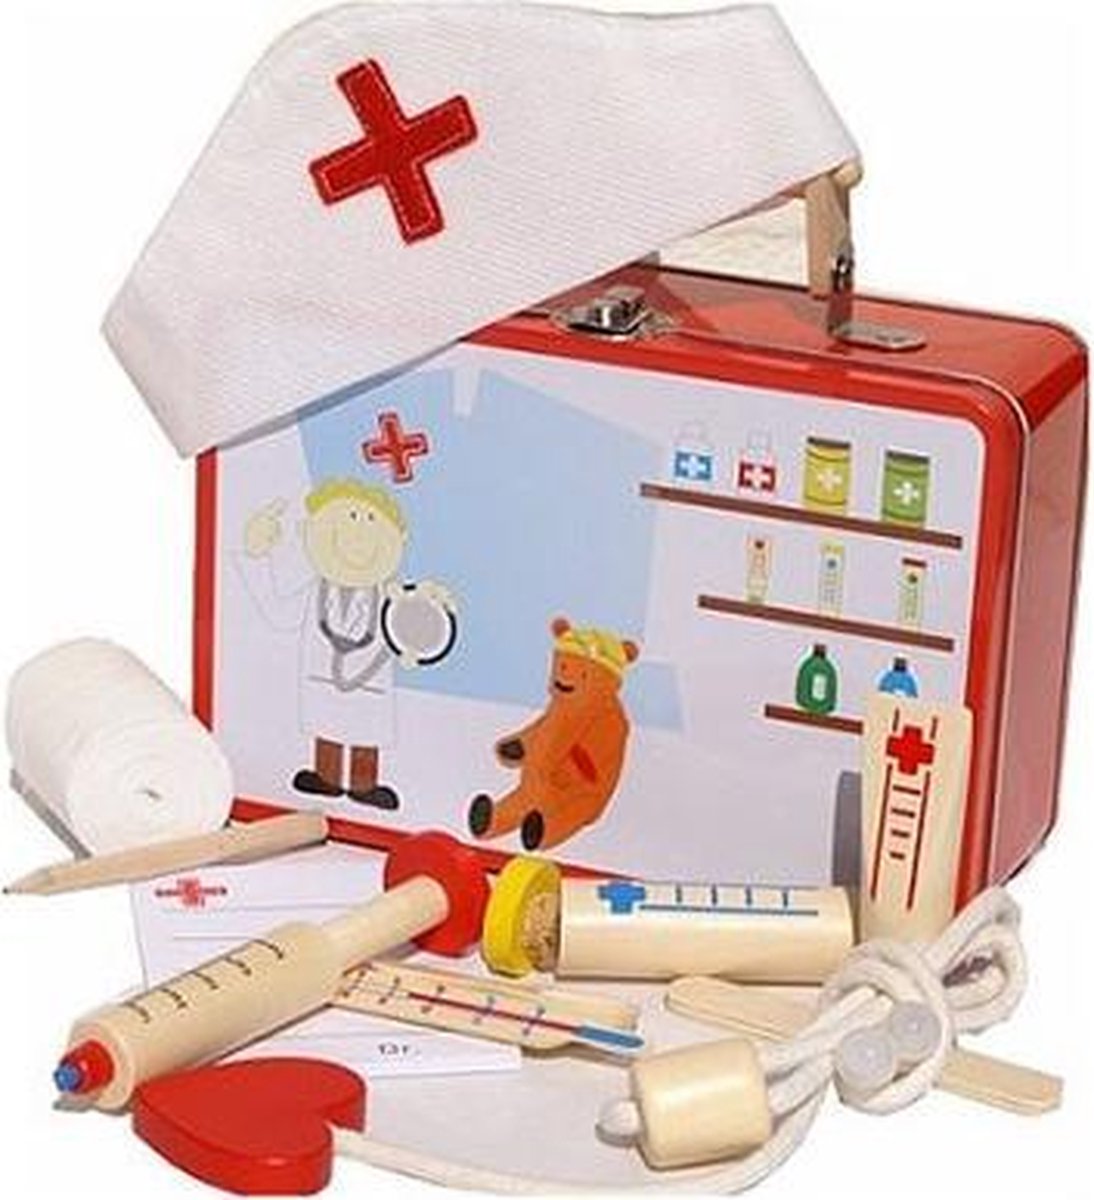 Dokterskoffer met houten dokter accessoires - speelgoeddoktersset - Roel Speelgoed